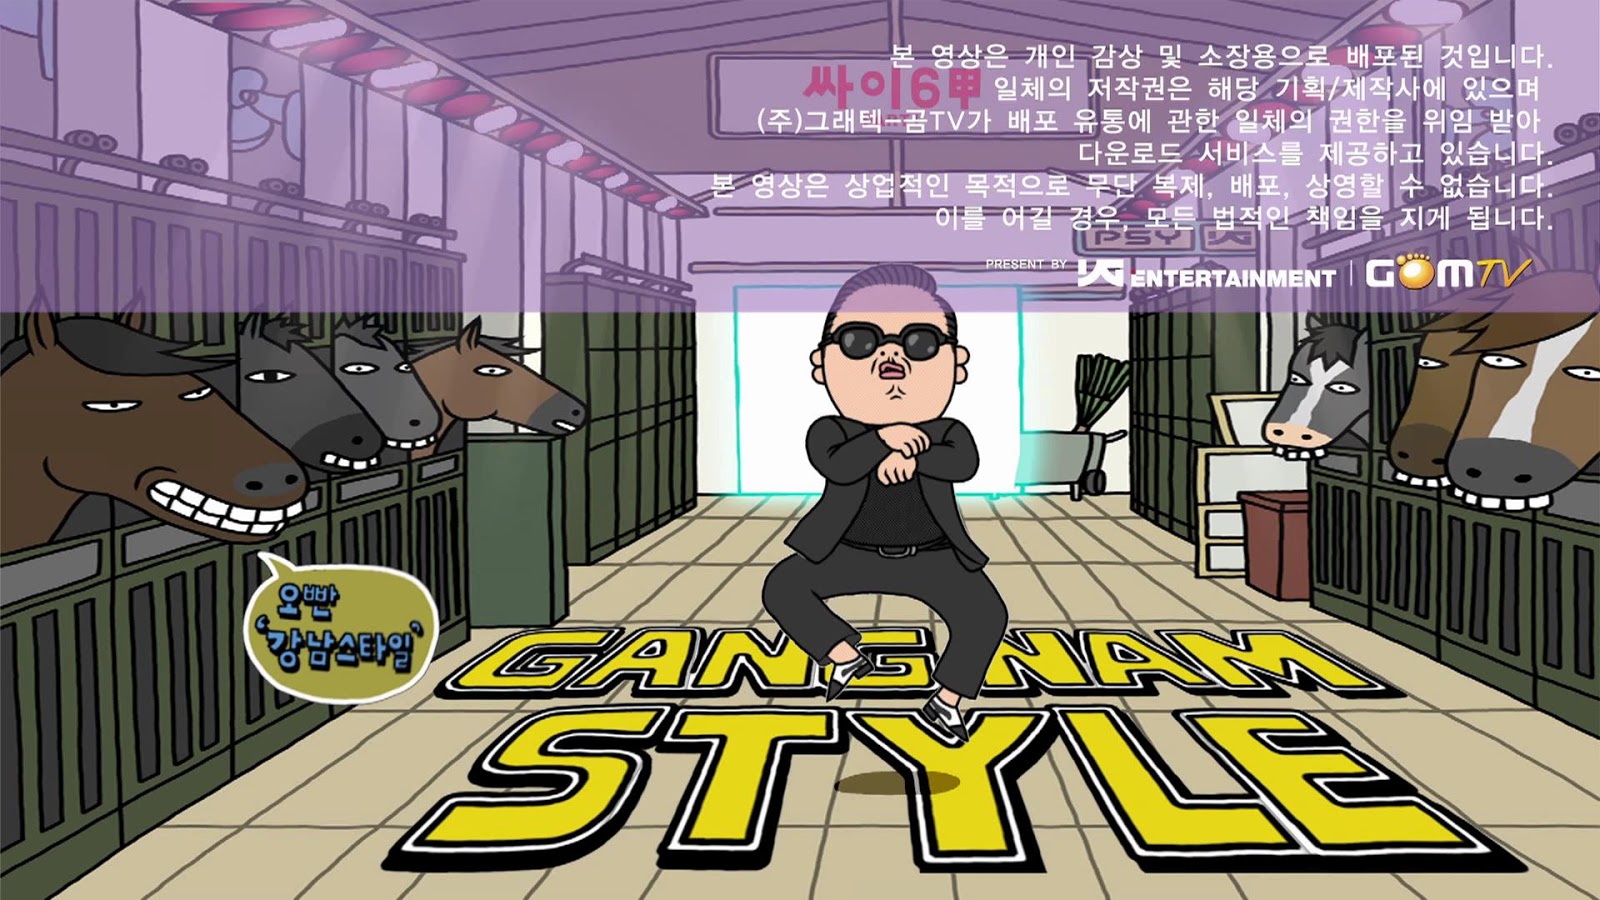 Psy Gangnam Style Mp3 Free Download 320kbps